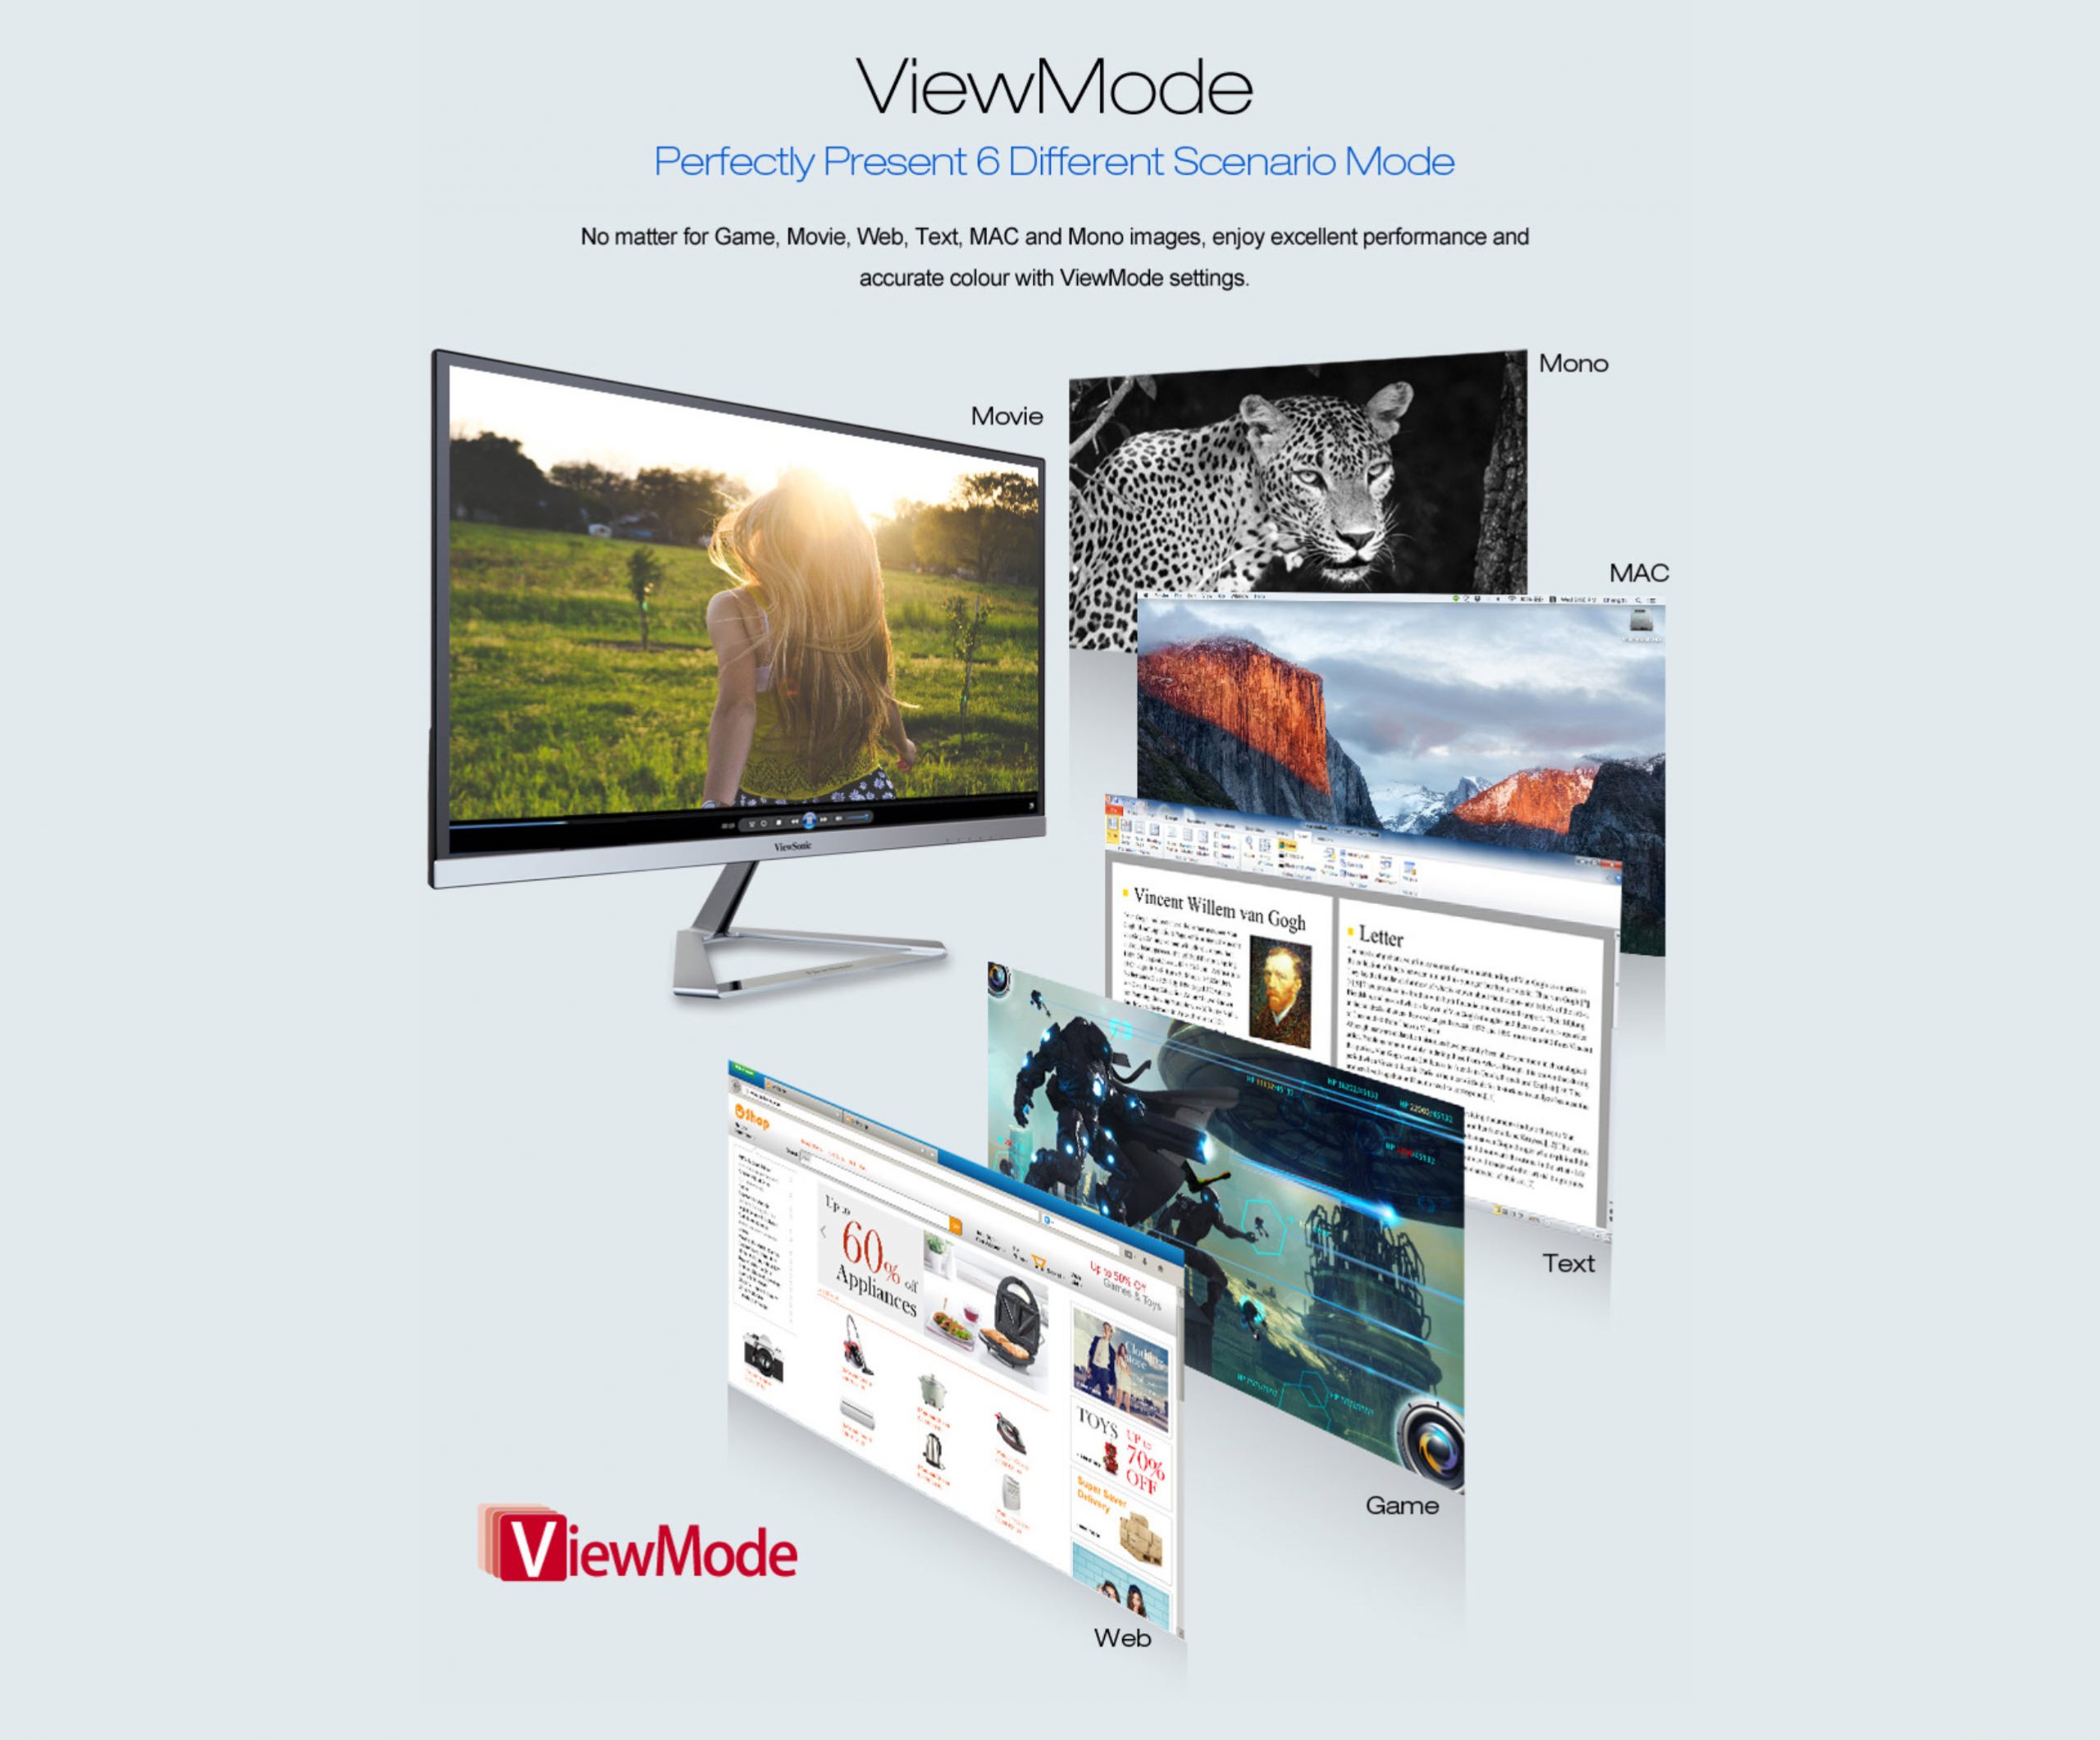 ViewSonic VX2776-SMHD 27″ IPS 1080p Frameless LED Monitor – New